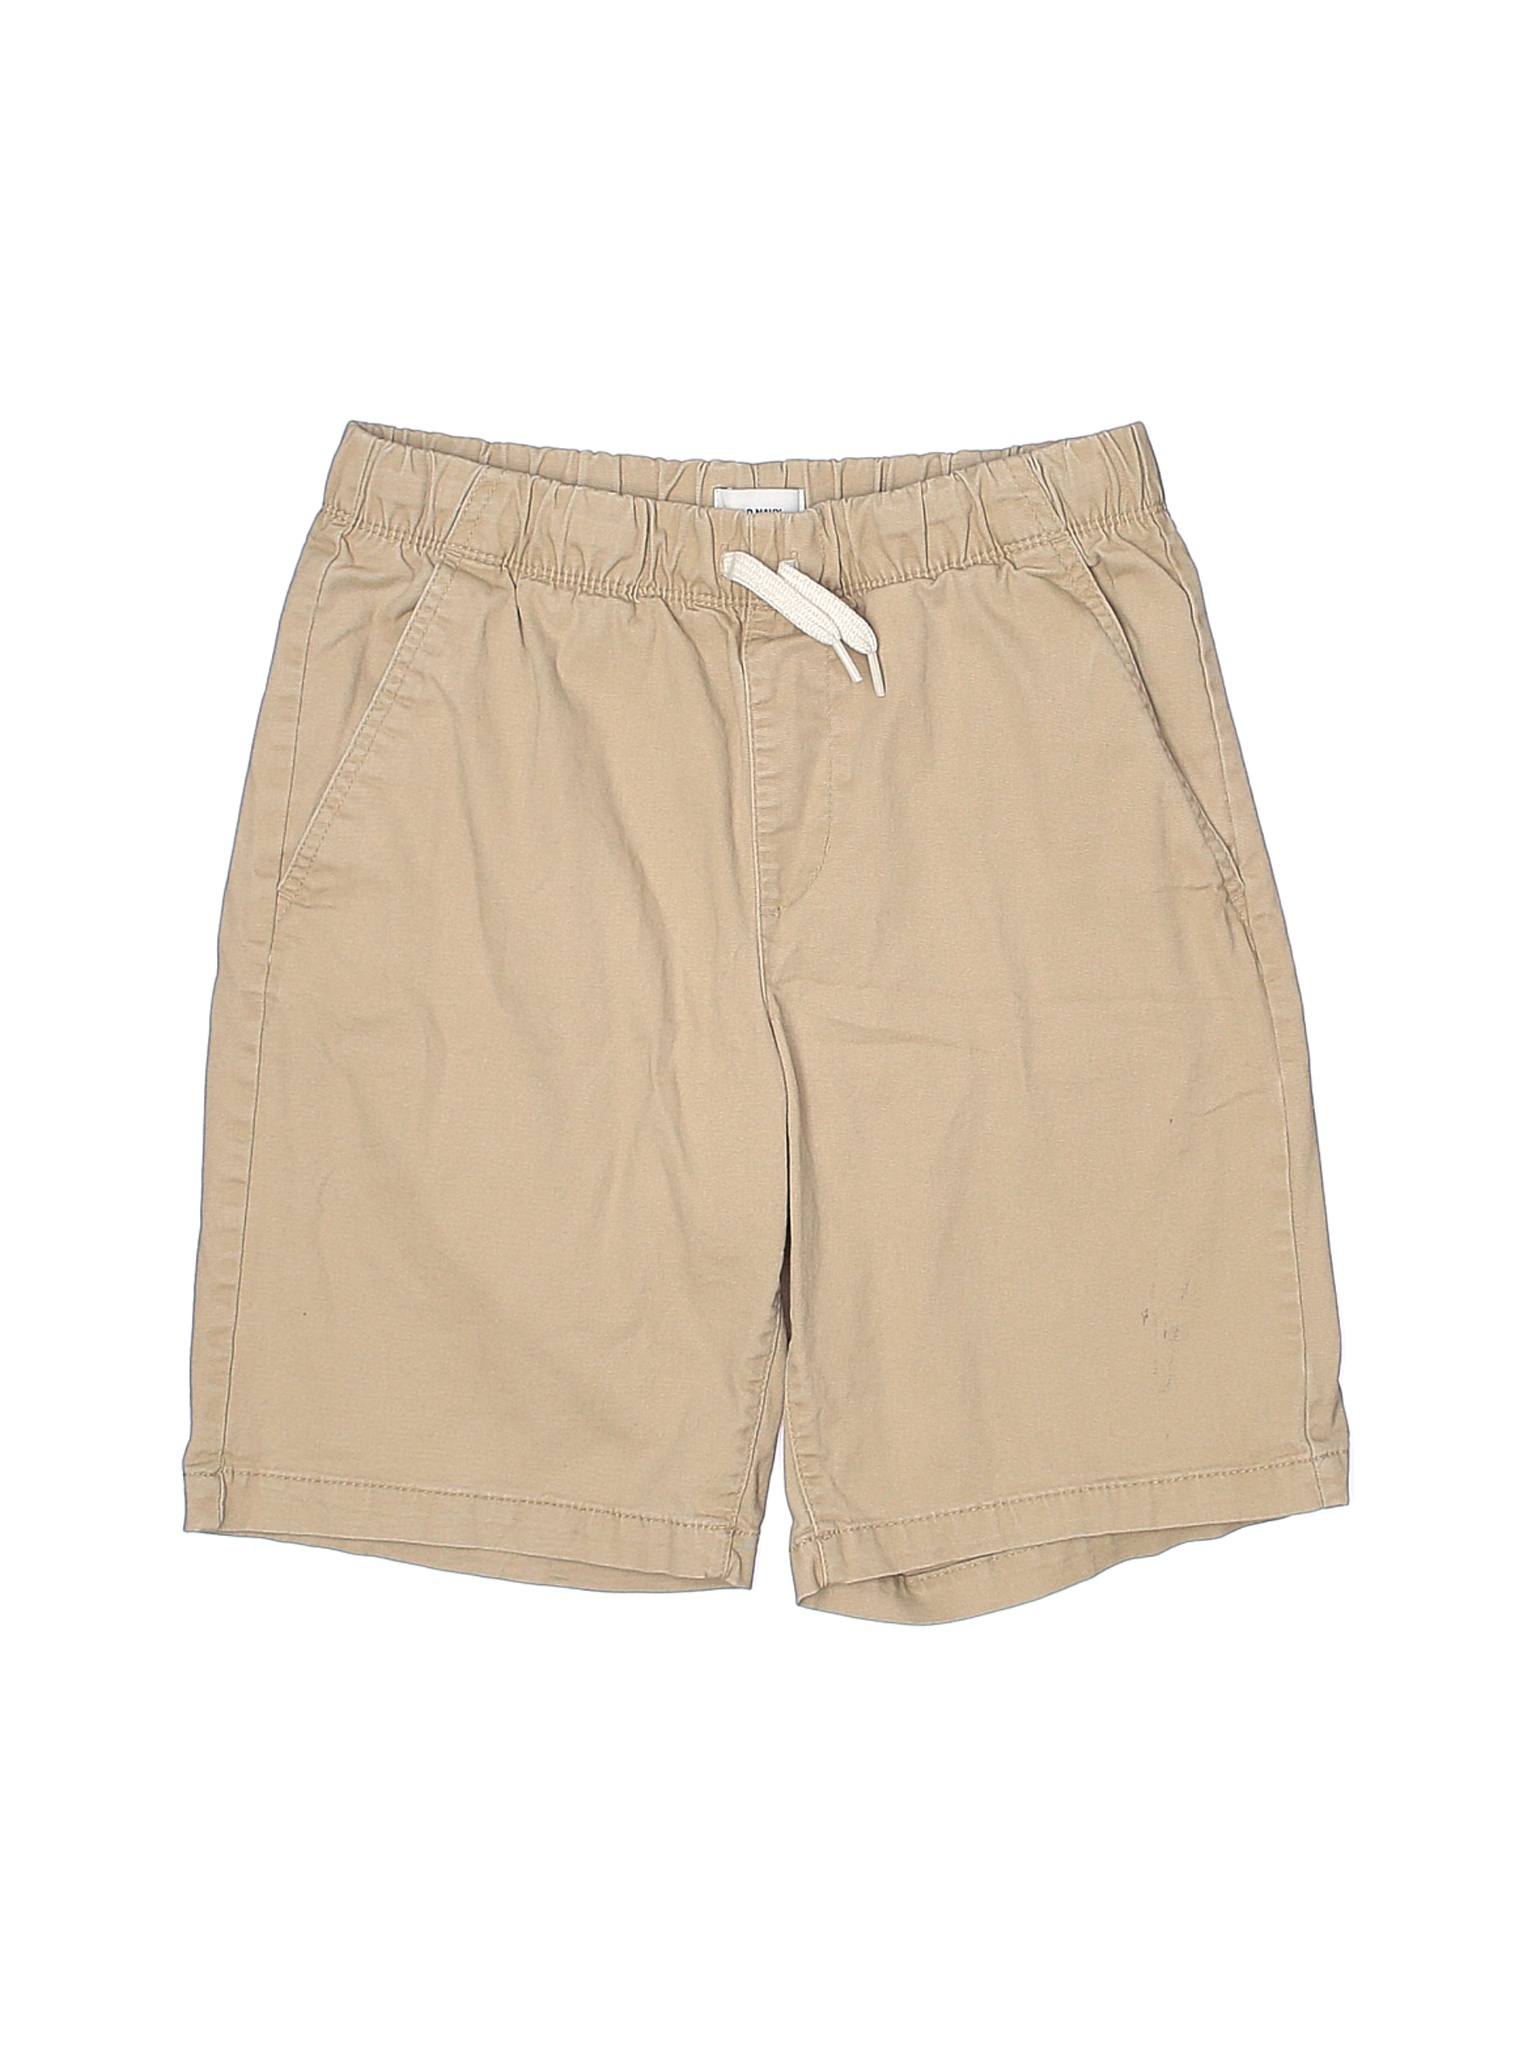 Old Navy Boys Brown Shorts 14 | eBay